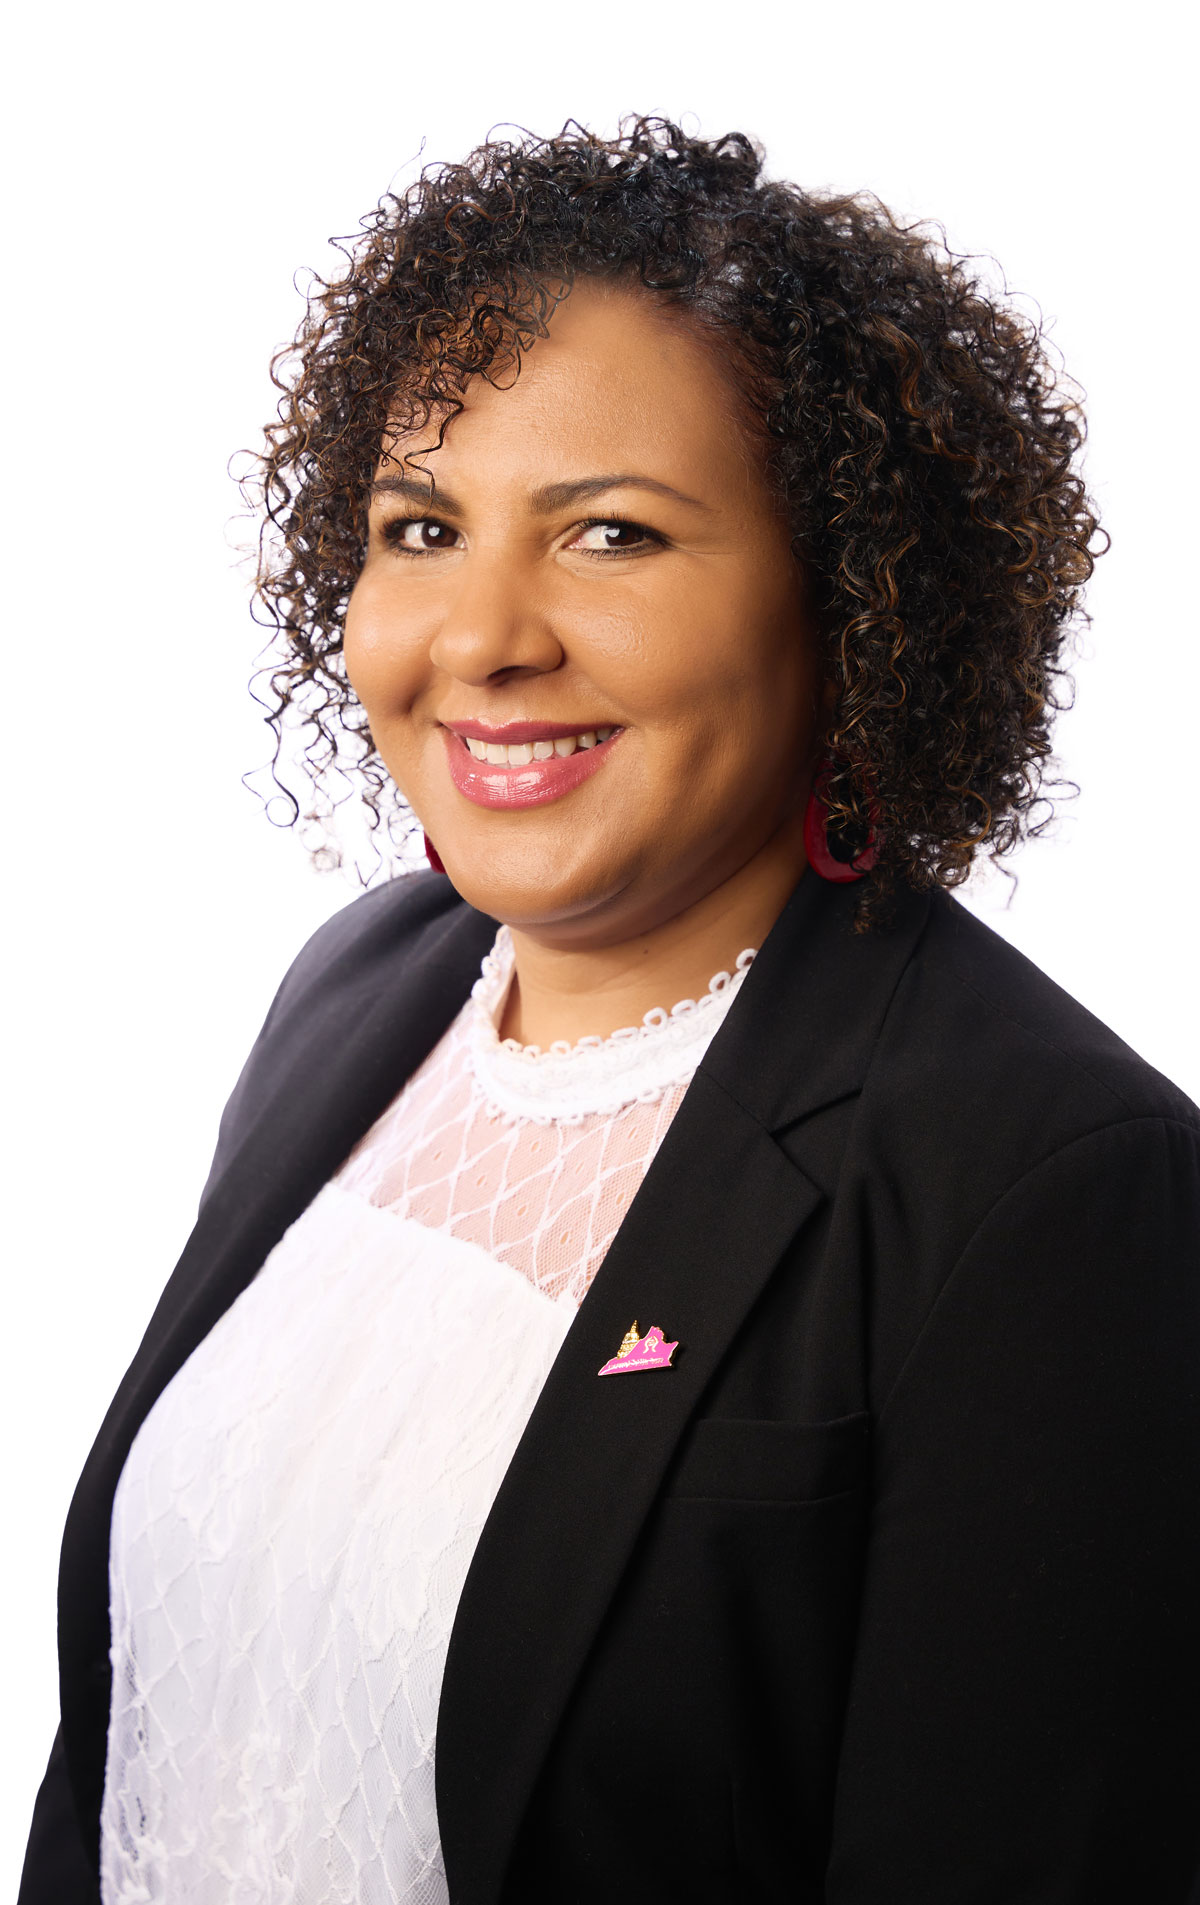 Virginia Credit Union League Announces Karima Freeman Will Serve as Interim President/CEO Effective March 1